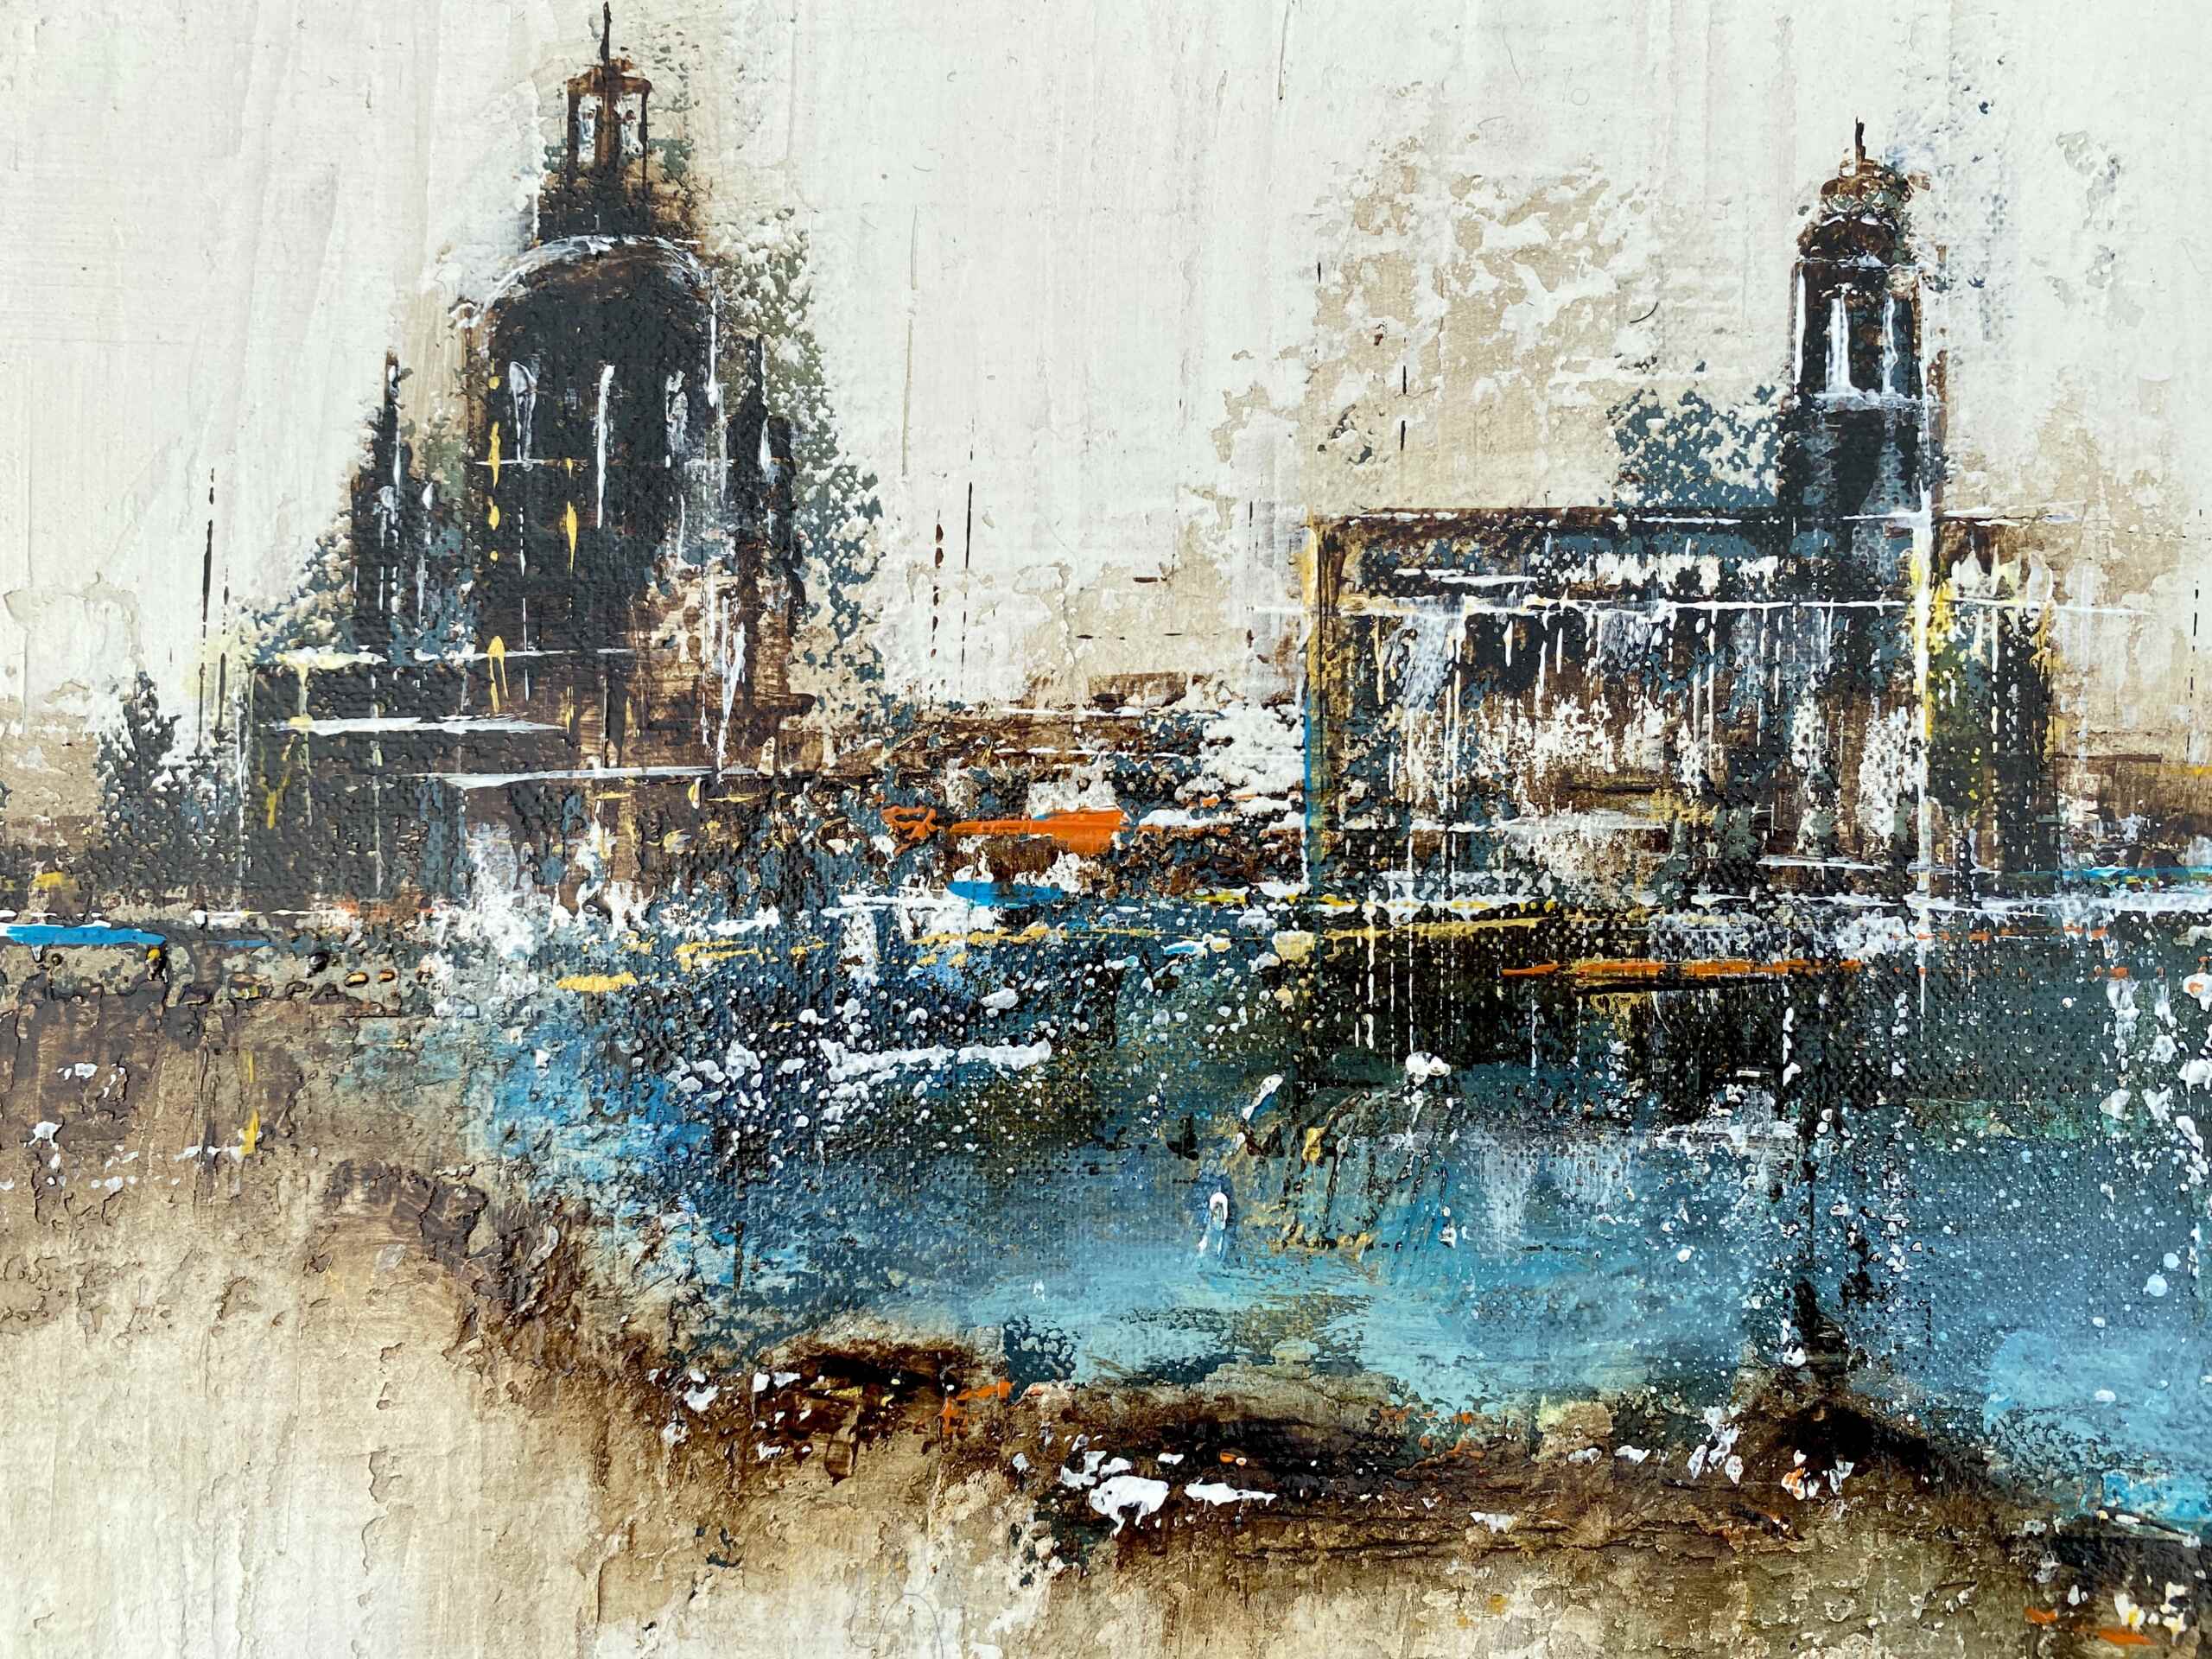 Detail of artwork "Elbe Impressions No 2" by Nina Groth